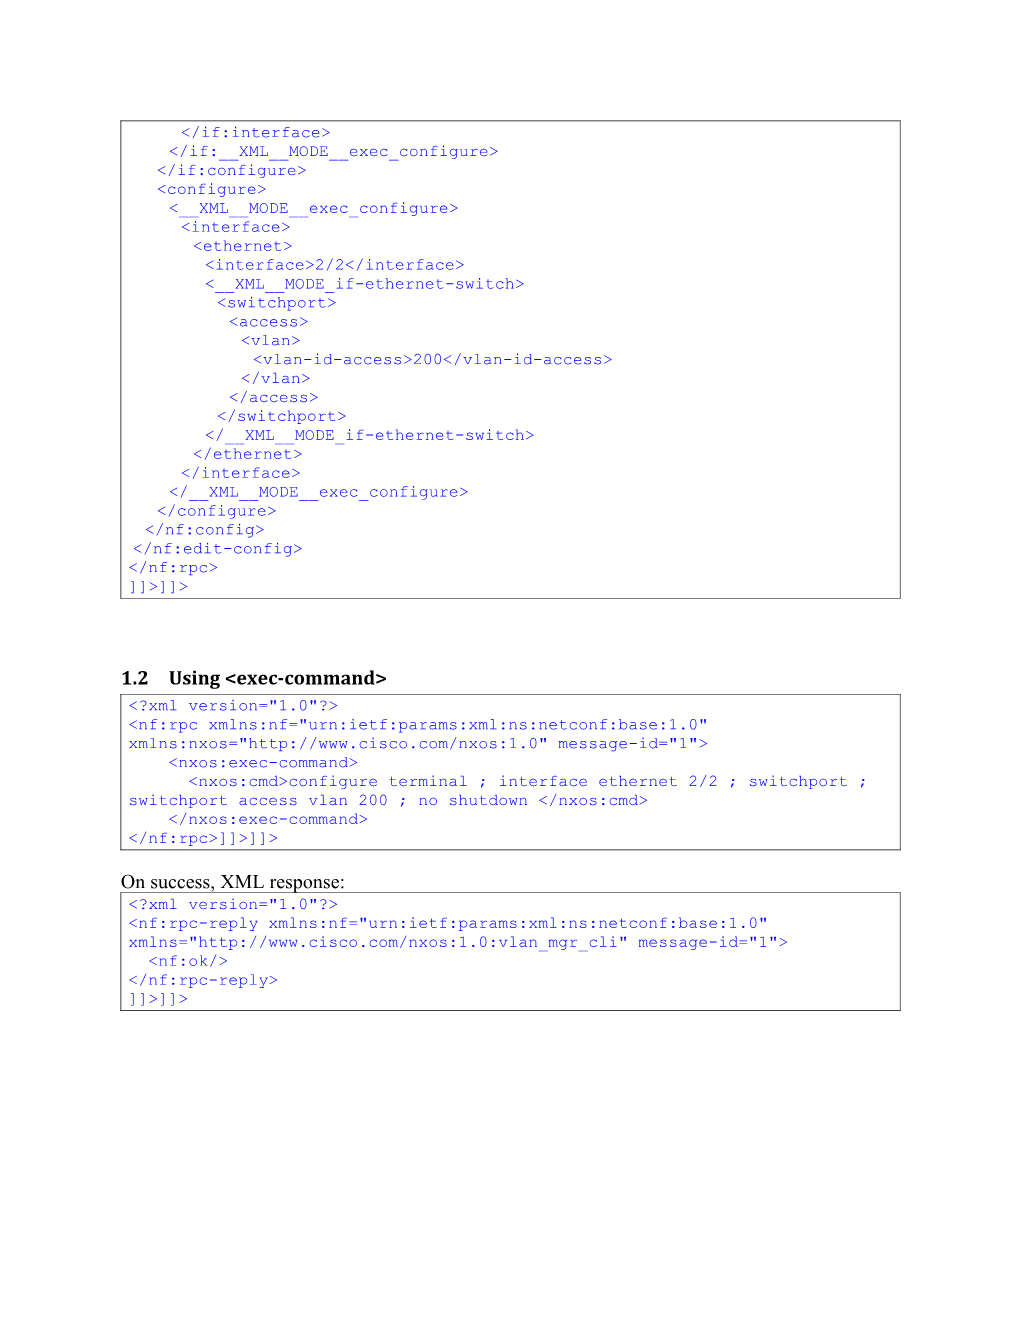 Nexus 7000 XML Schema Files (Xsds) and Sample XML Instances/Scripts